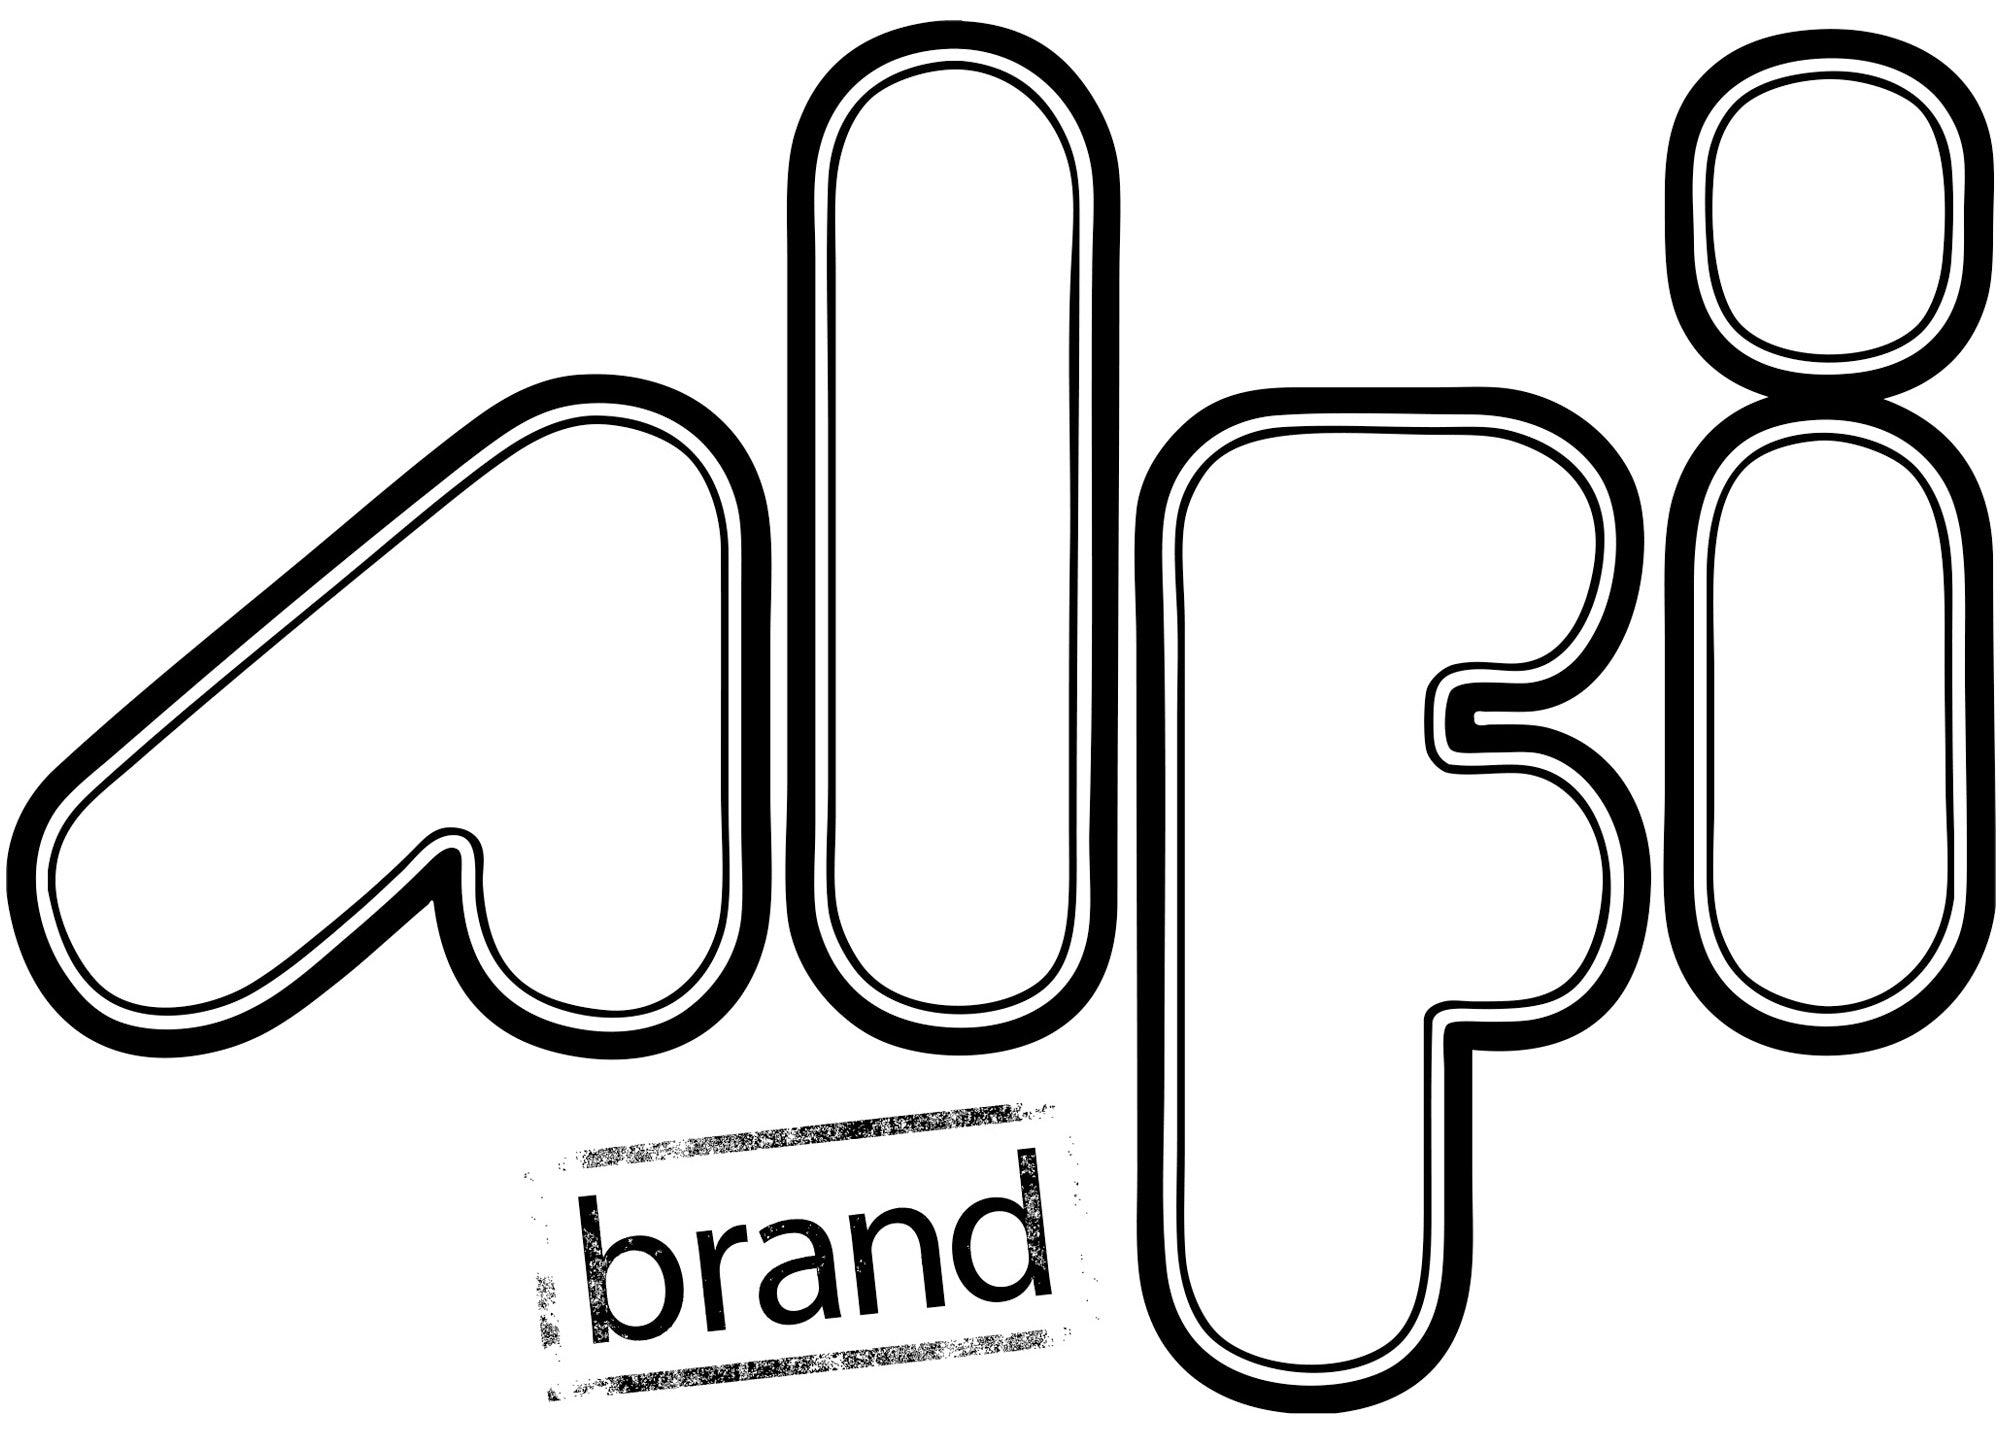 ALFI Brand - Black Matte 3-Way Thermostatic Valve Shower Mixer Round Knobs | AB4001-BM